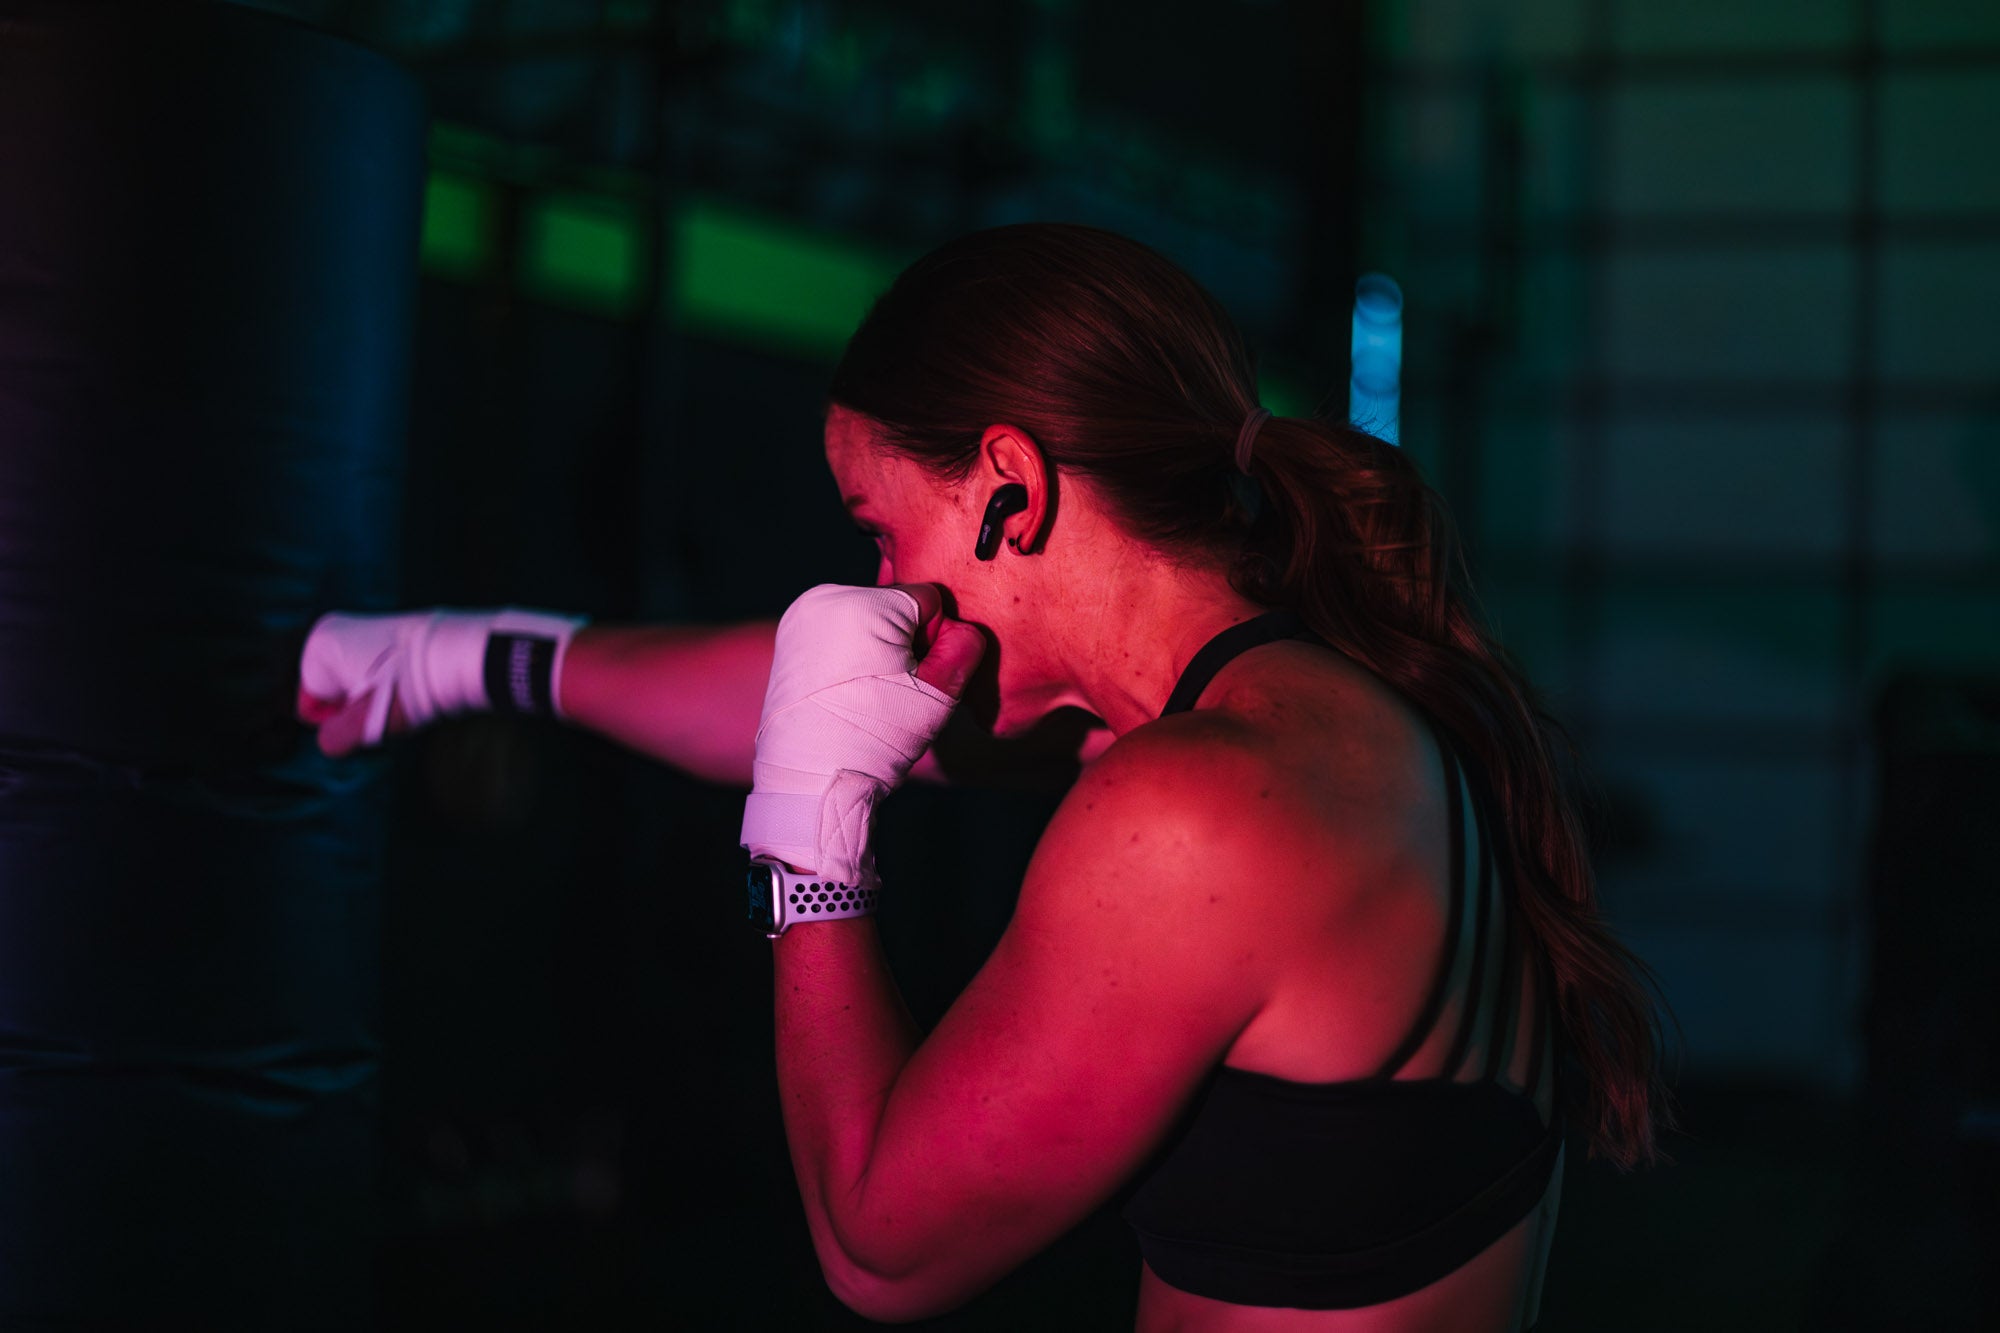 Woman wearing earbud while kickboxing